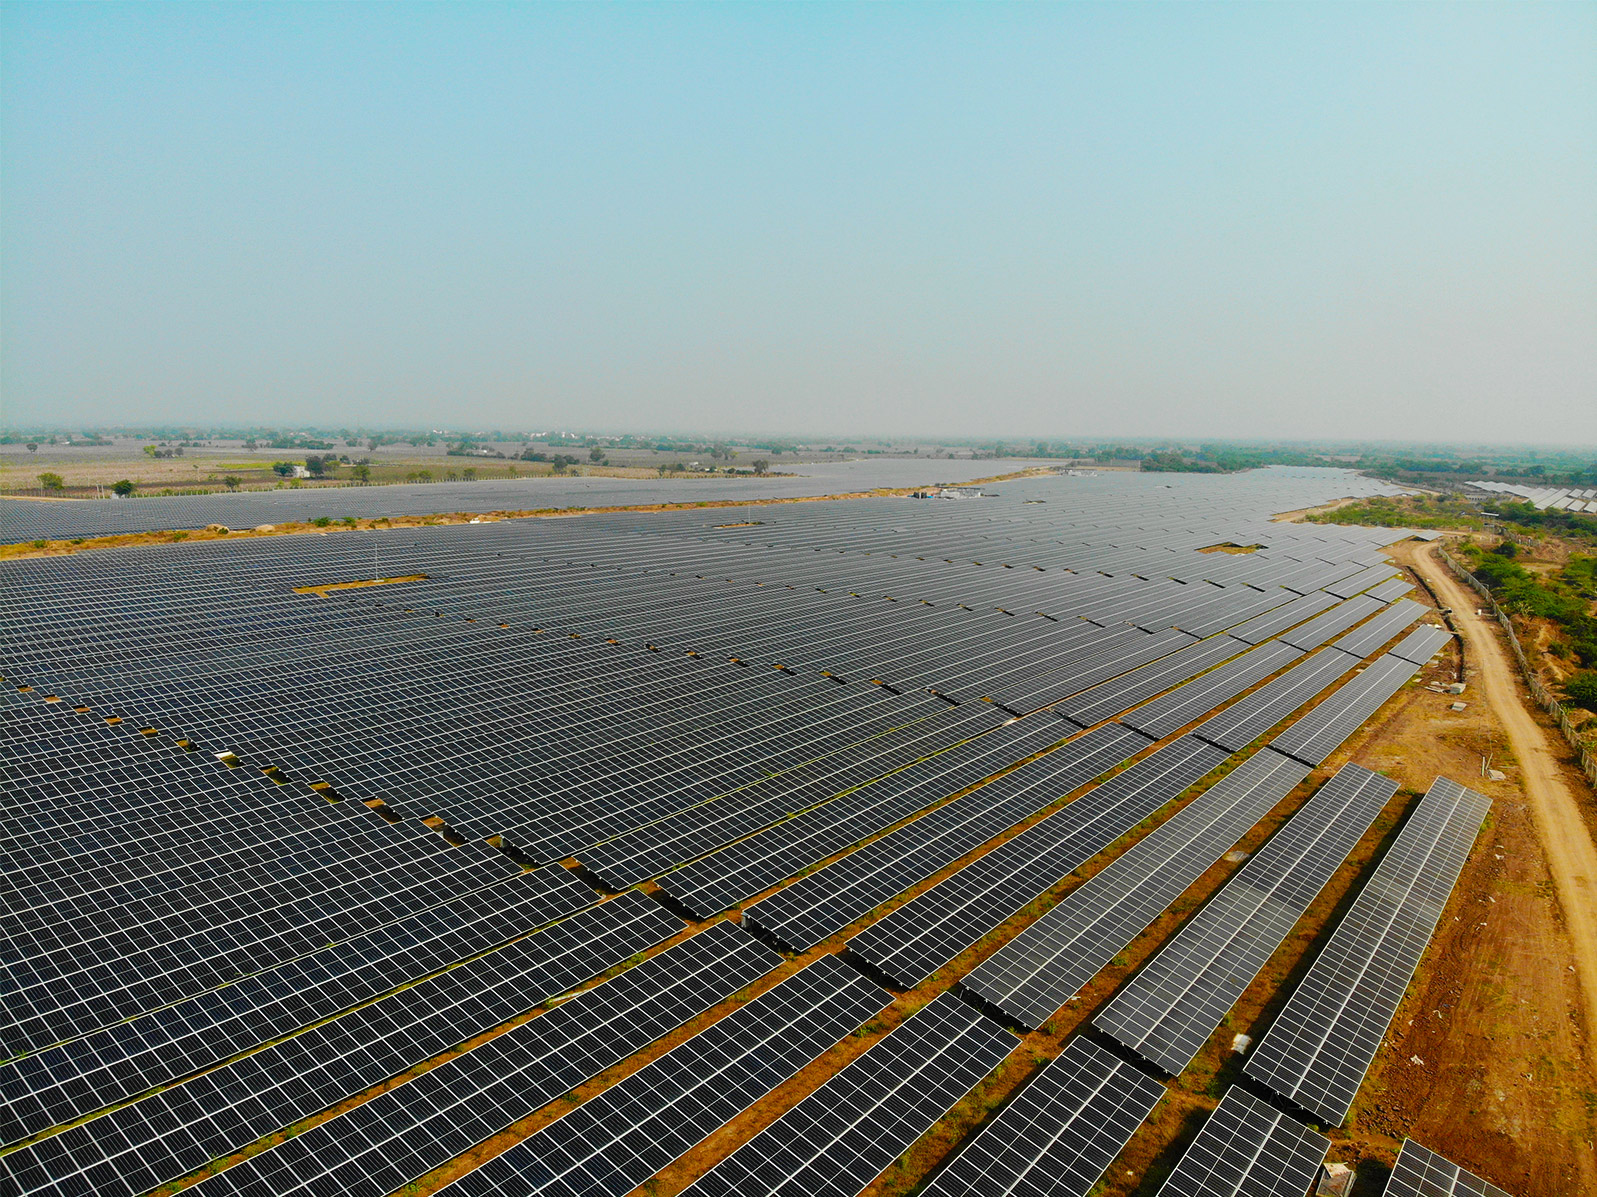 70 MW Paryapt Solar farm by ACEN and UPC Renewables